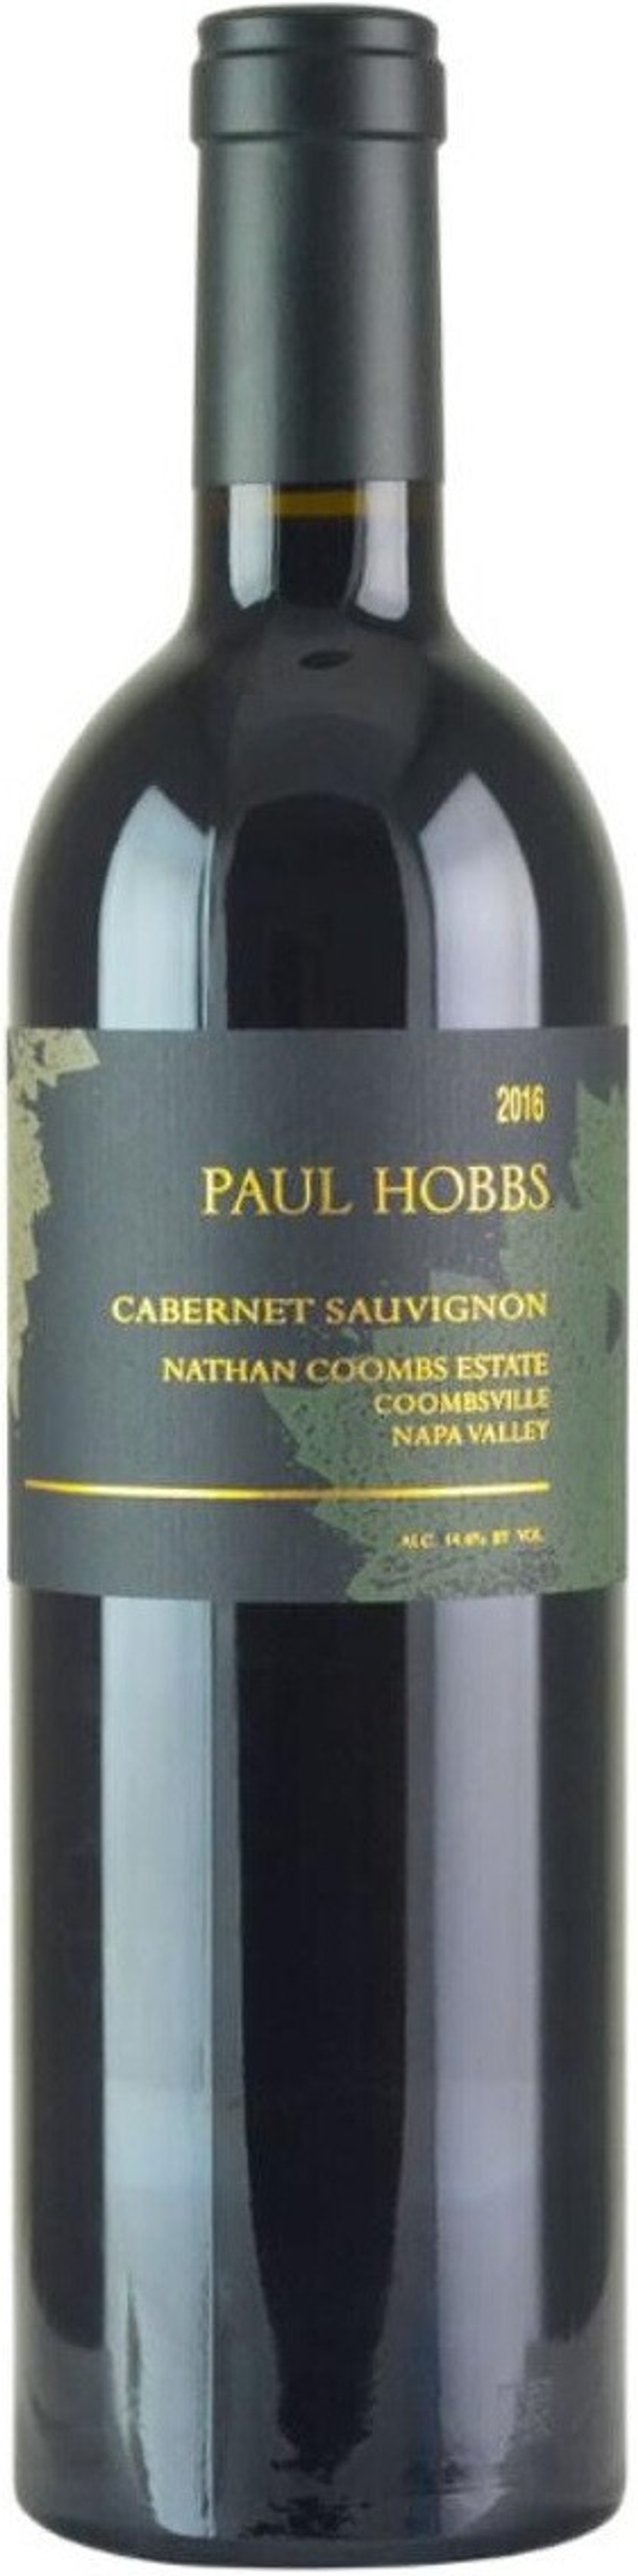 Вино Paul Hobbs Cabernet Sauvignon Nathan Coombs Estate, 0,75 л.